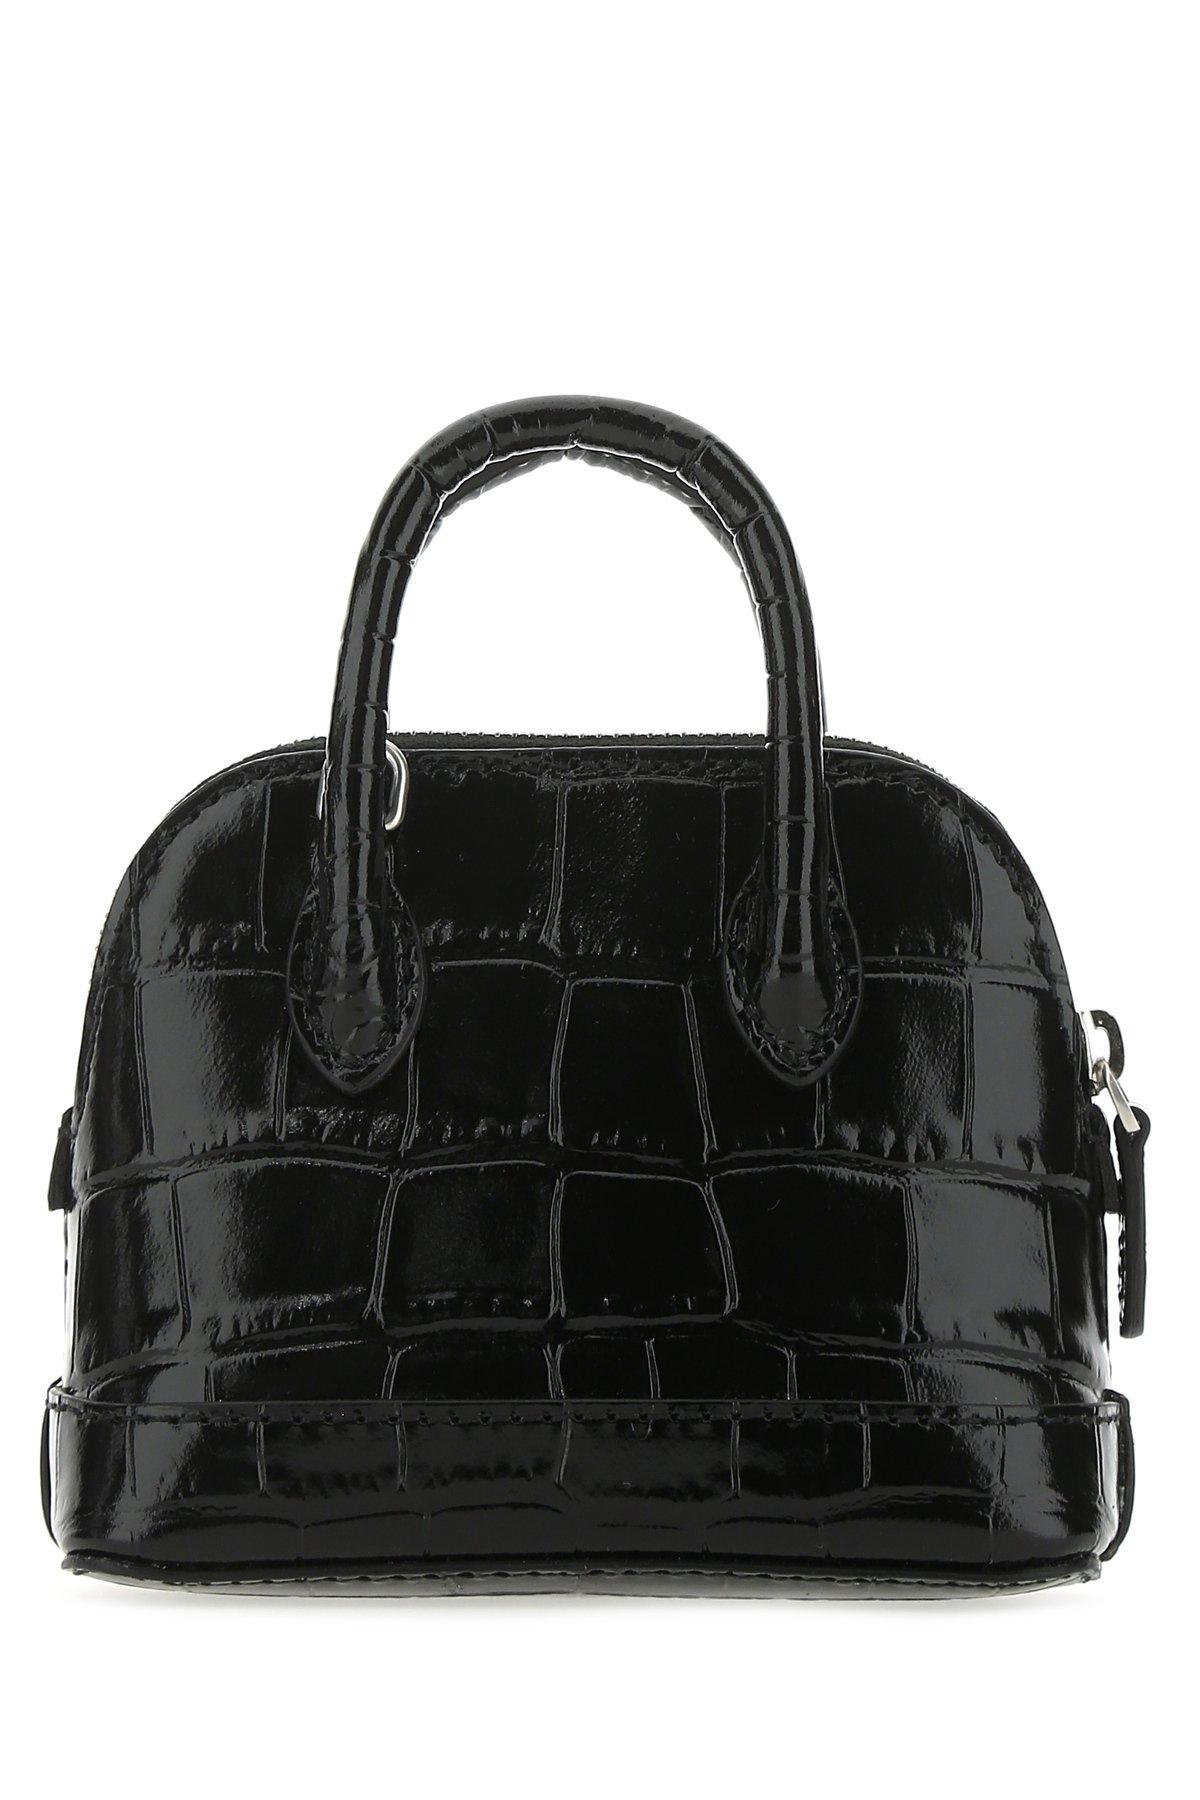 Balenciaga Ville Mini Top Handle Bag in Black | Lyst